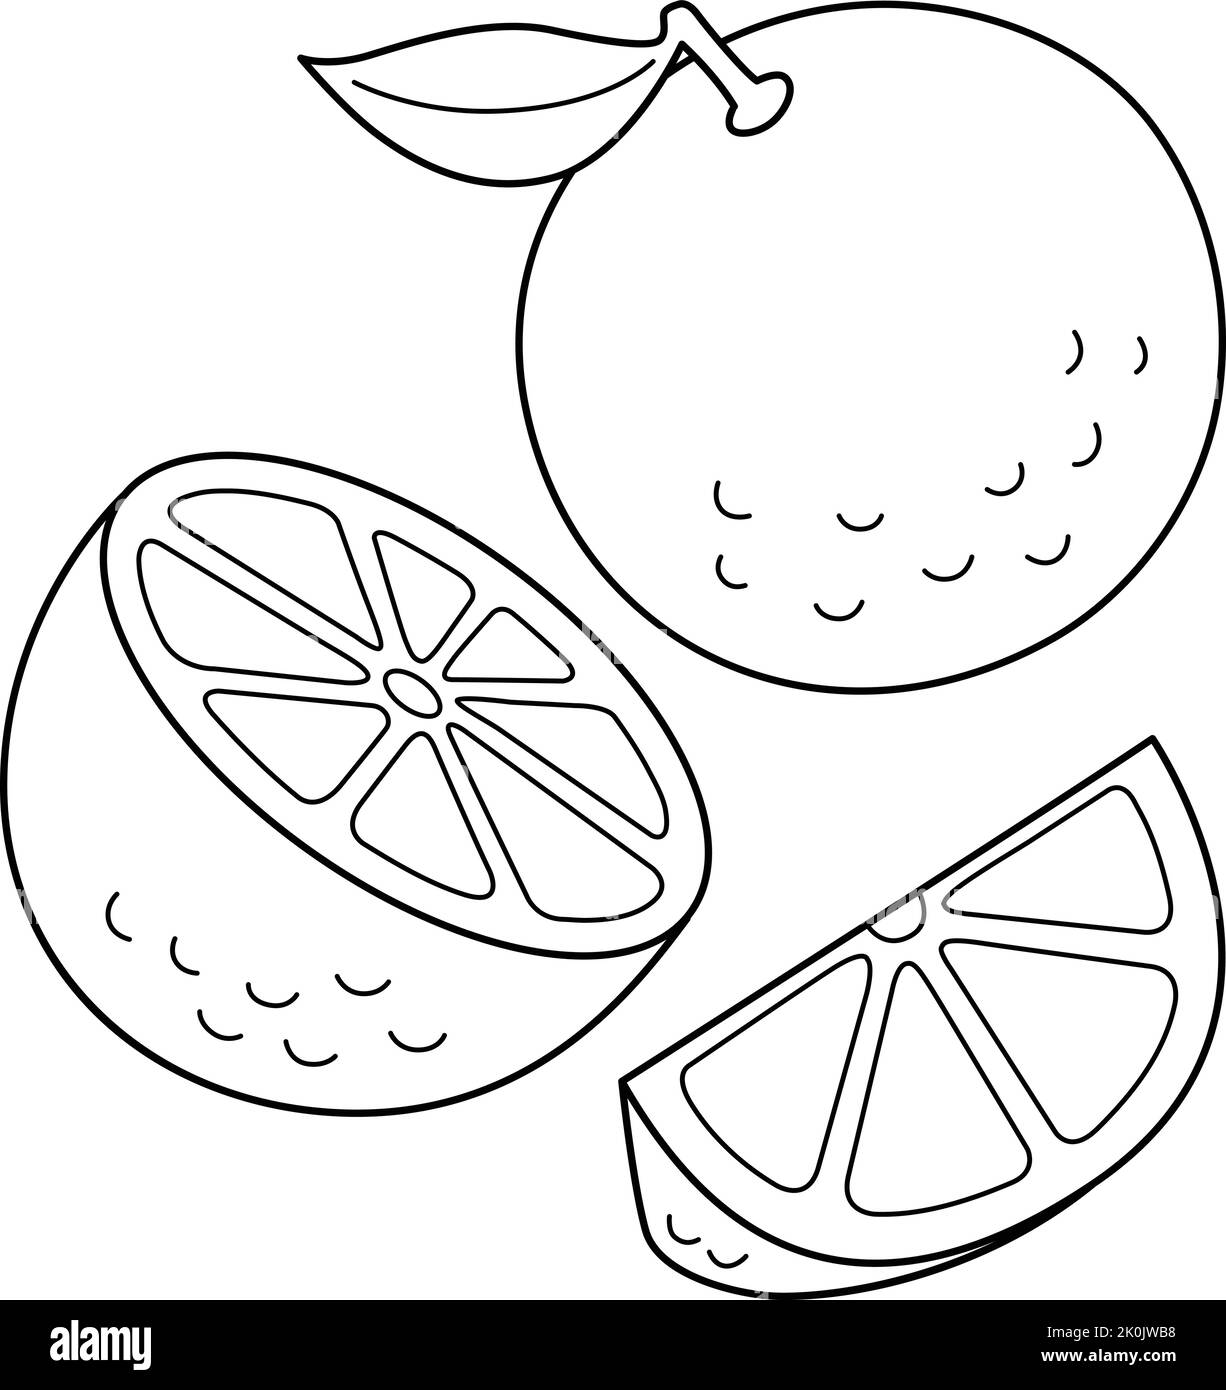 Premium Vector  Lime line icon in vector citrus fruit illustration